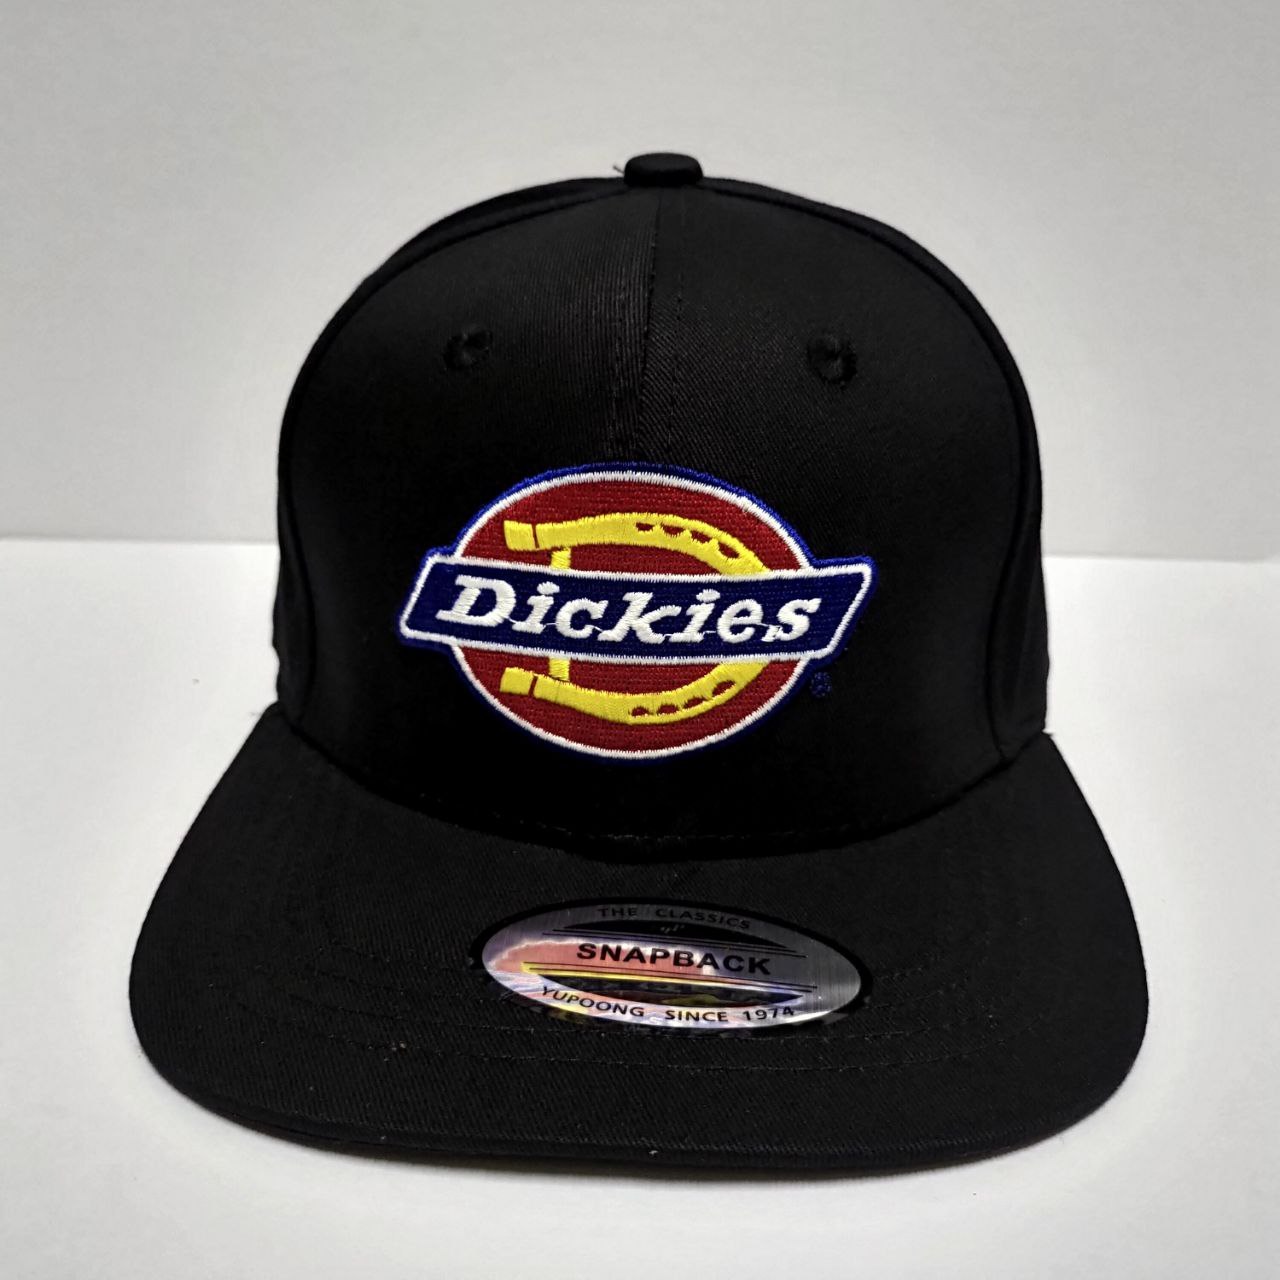 Dickies Snapback Cap (NEW) Premium Quality EXPRESS SHIPPING